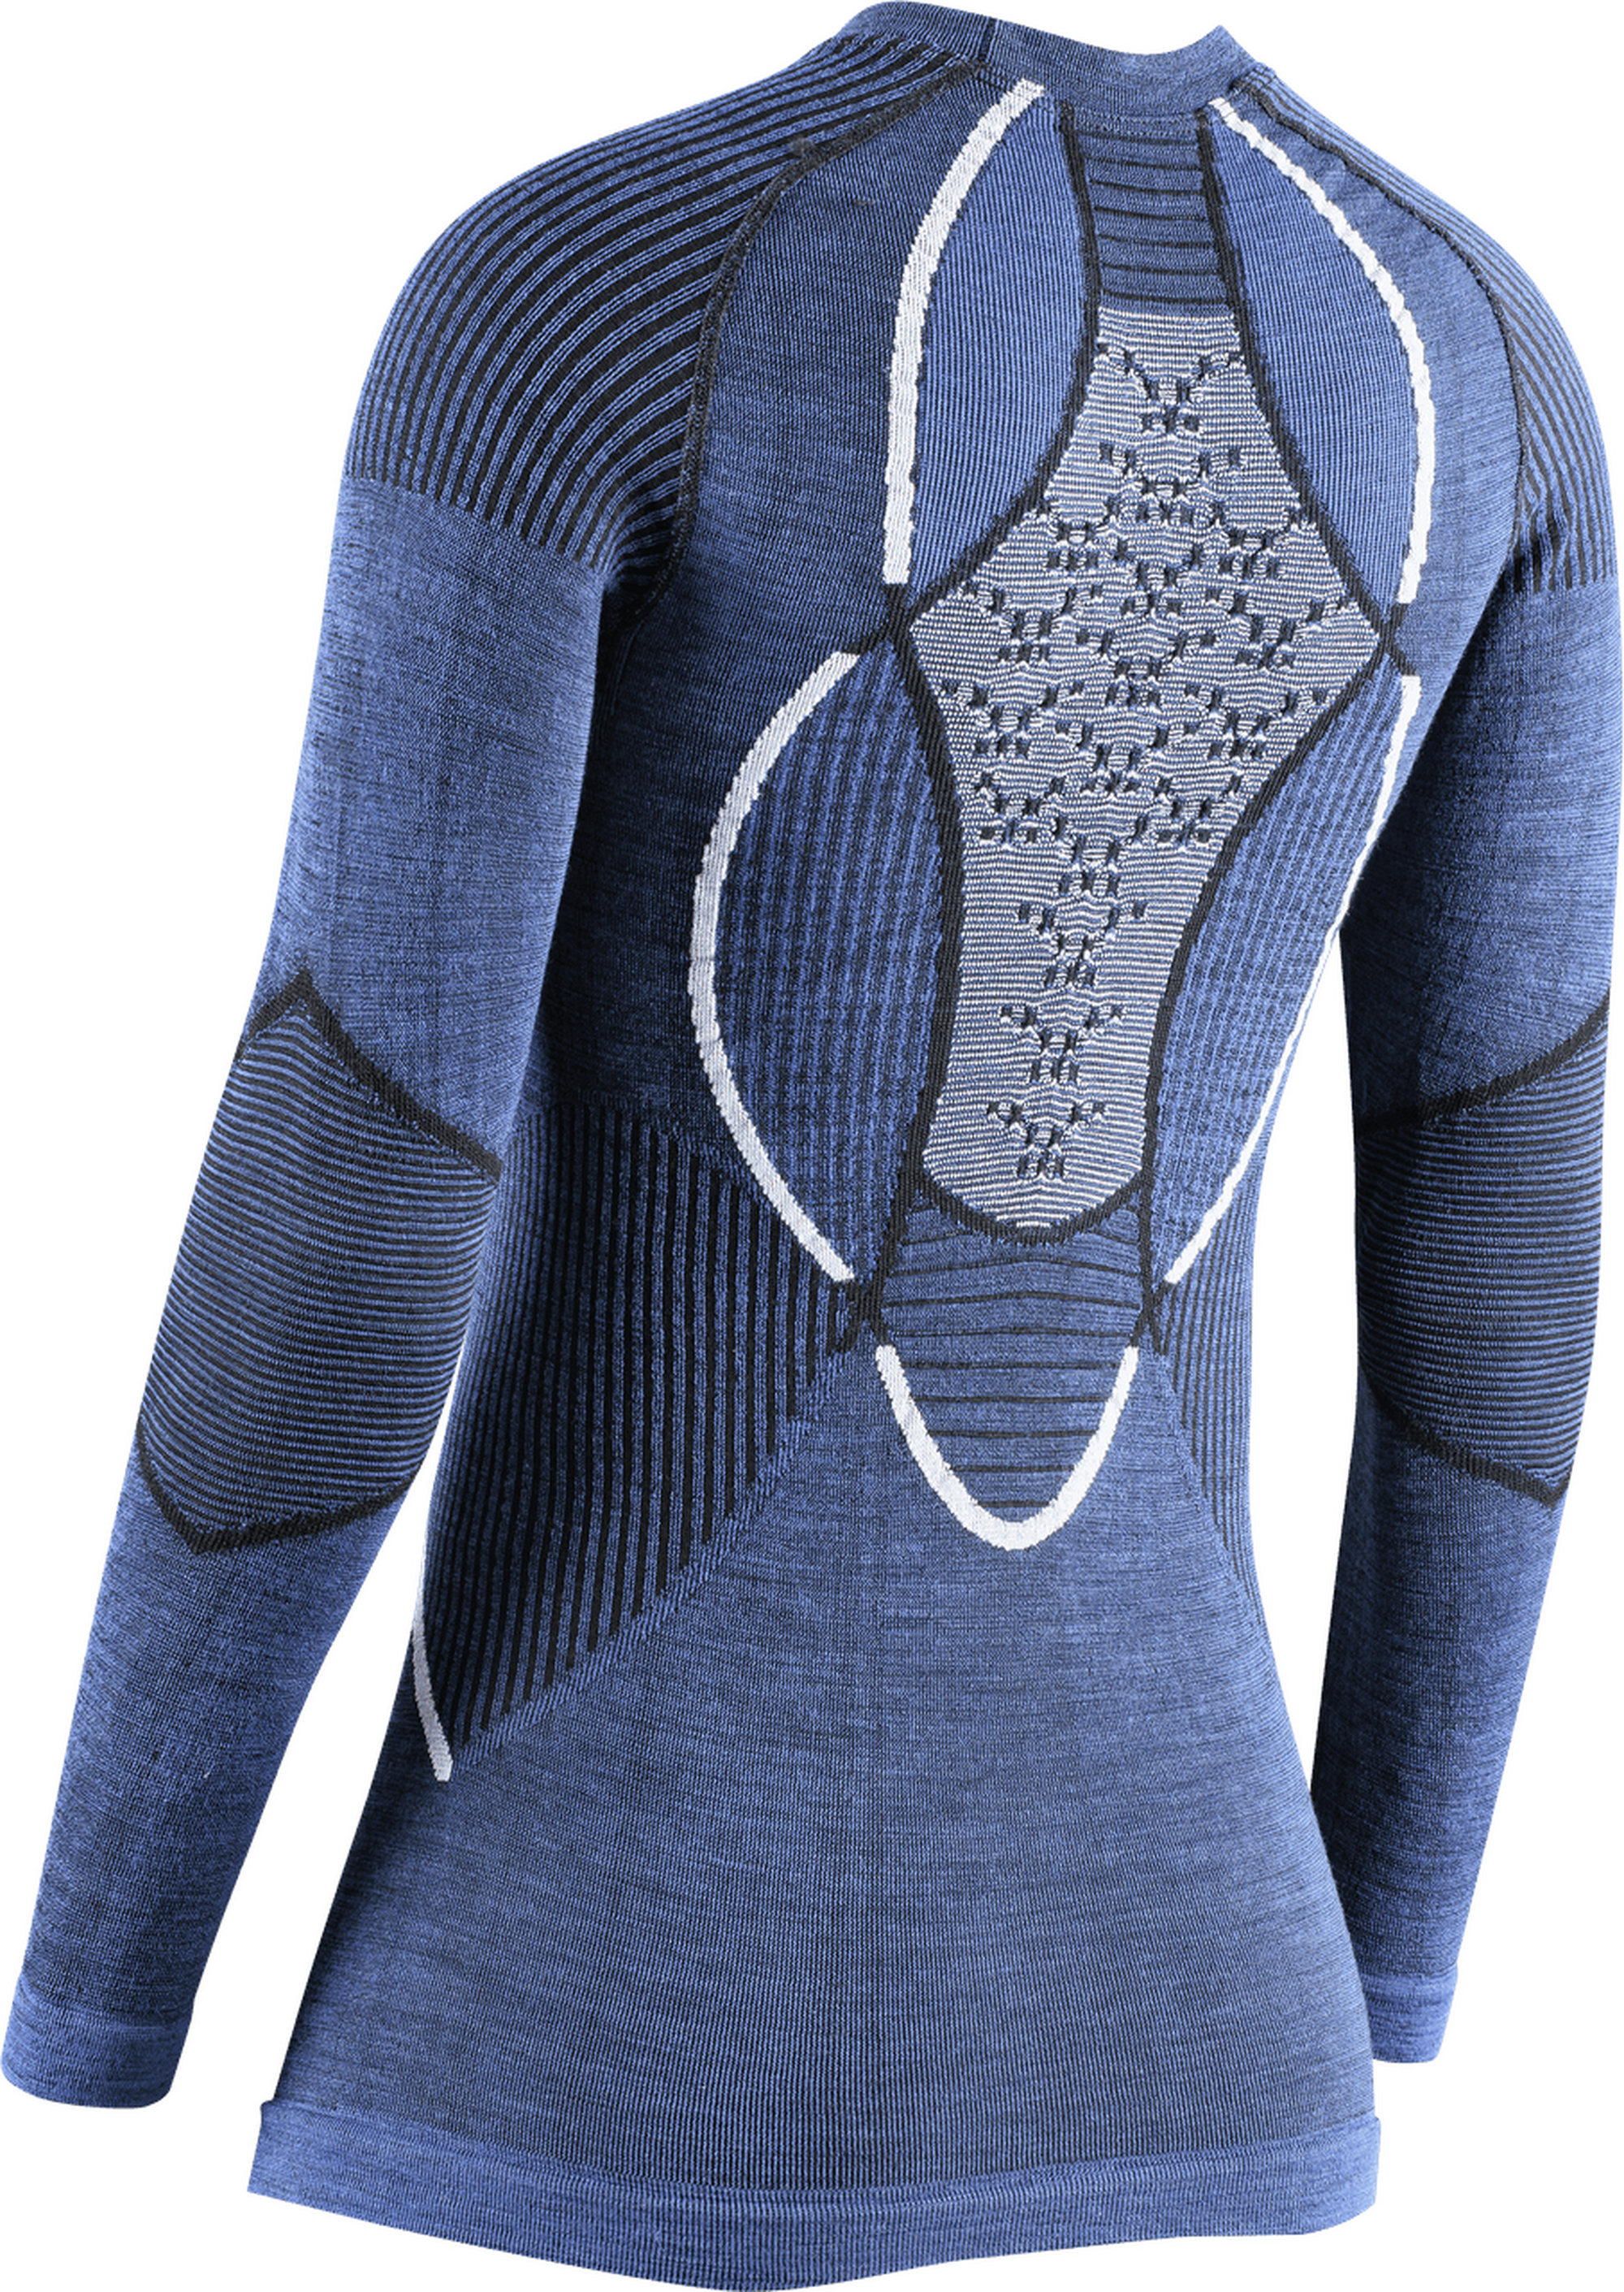 Im Test: X-Bionic Merino Shirt LG SL Damen